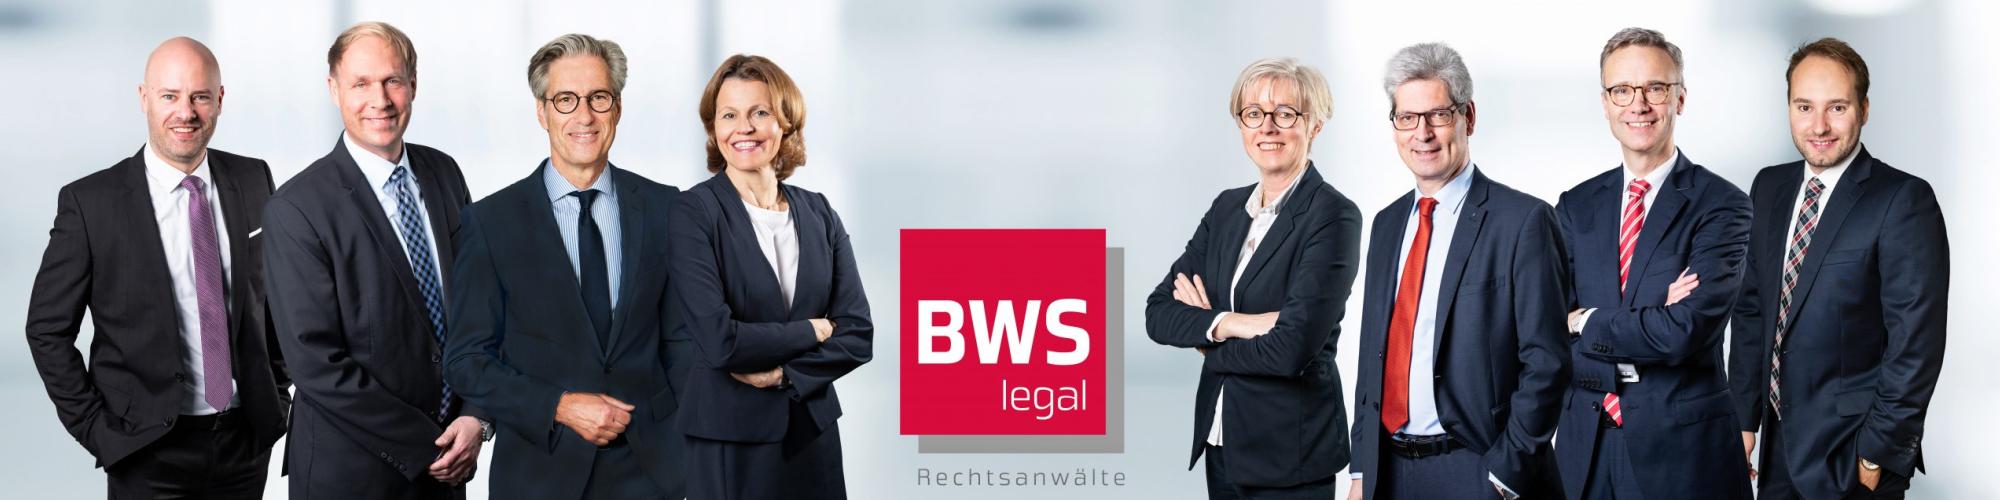 BWS legal Rechtsanwälte + Partner mbB